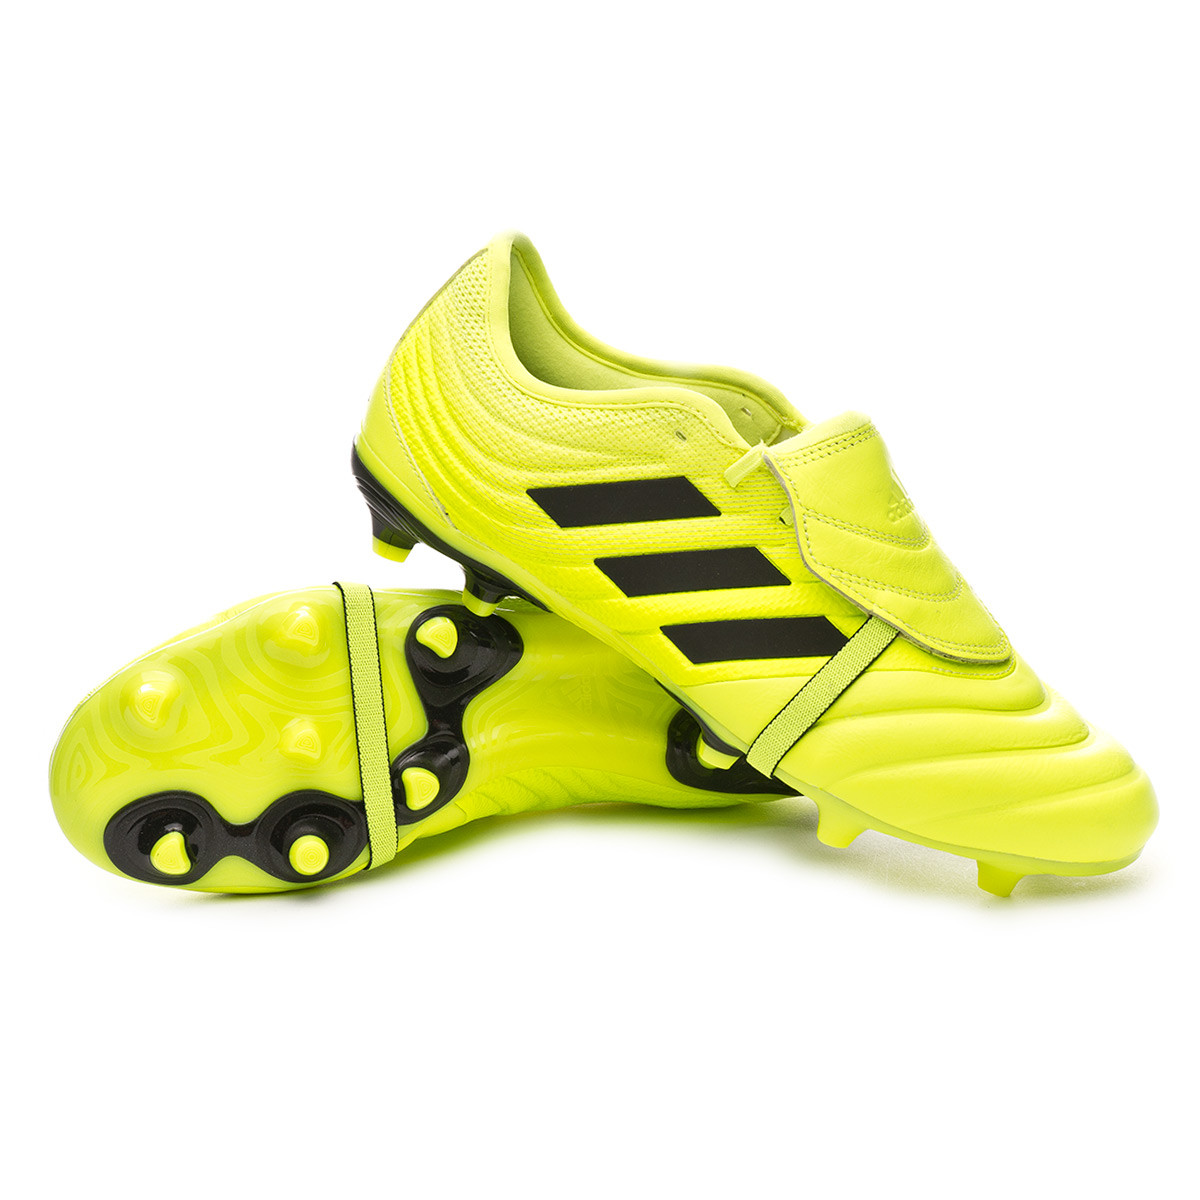 adidas copa gloro 19.2 fg football boots